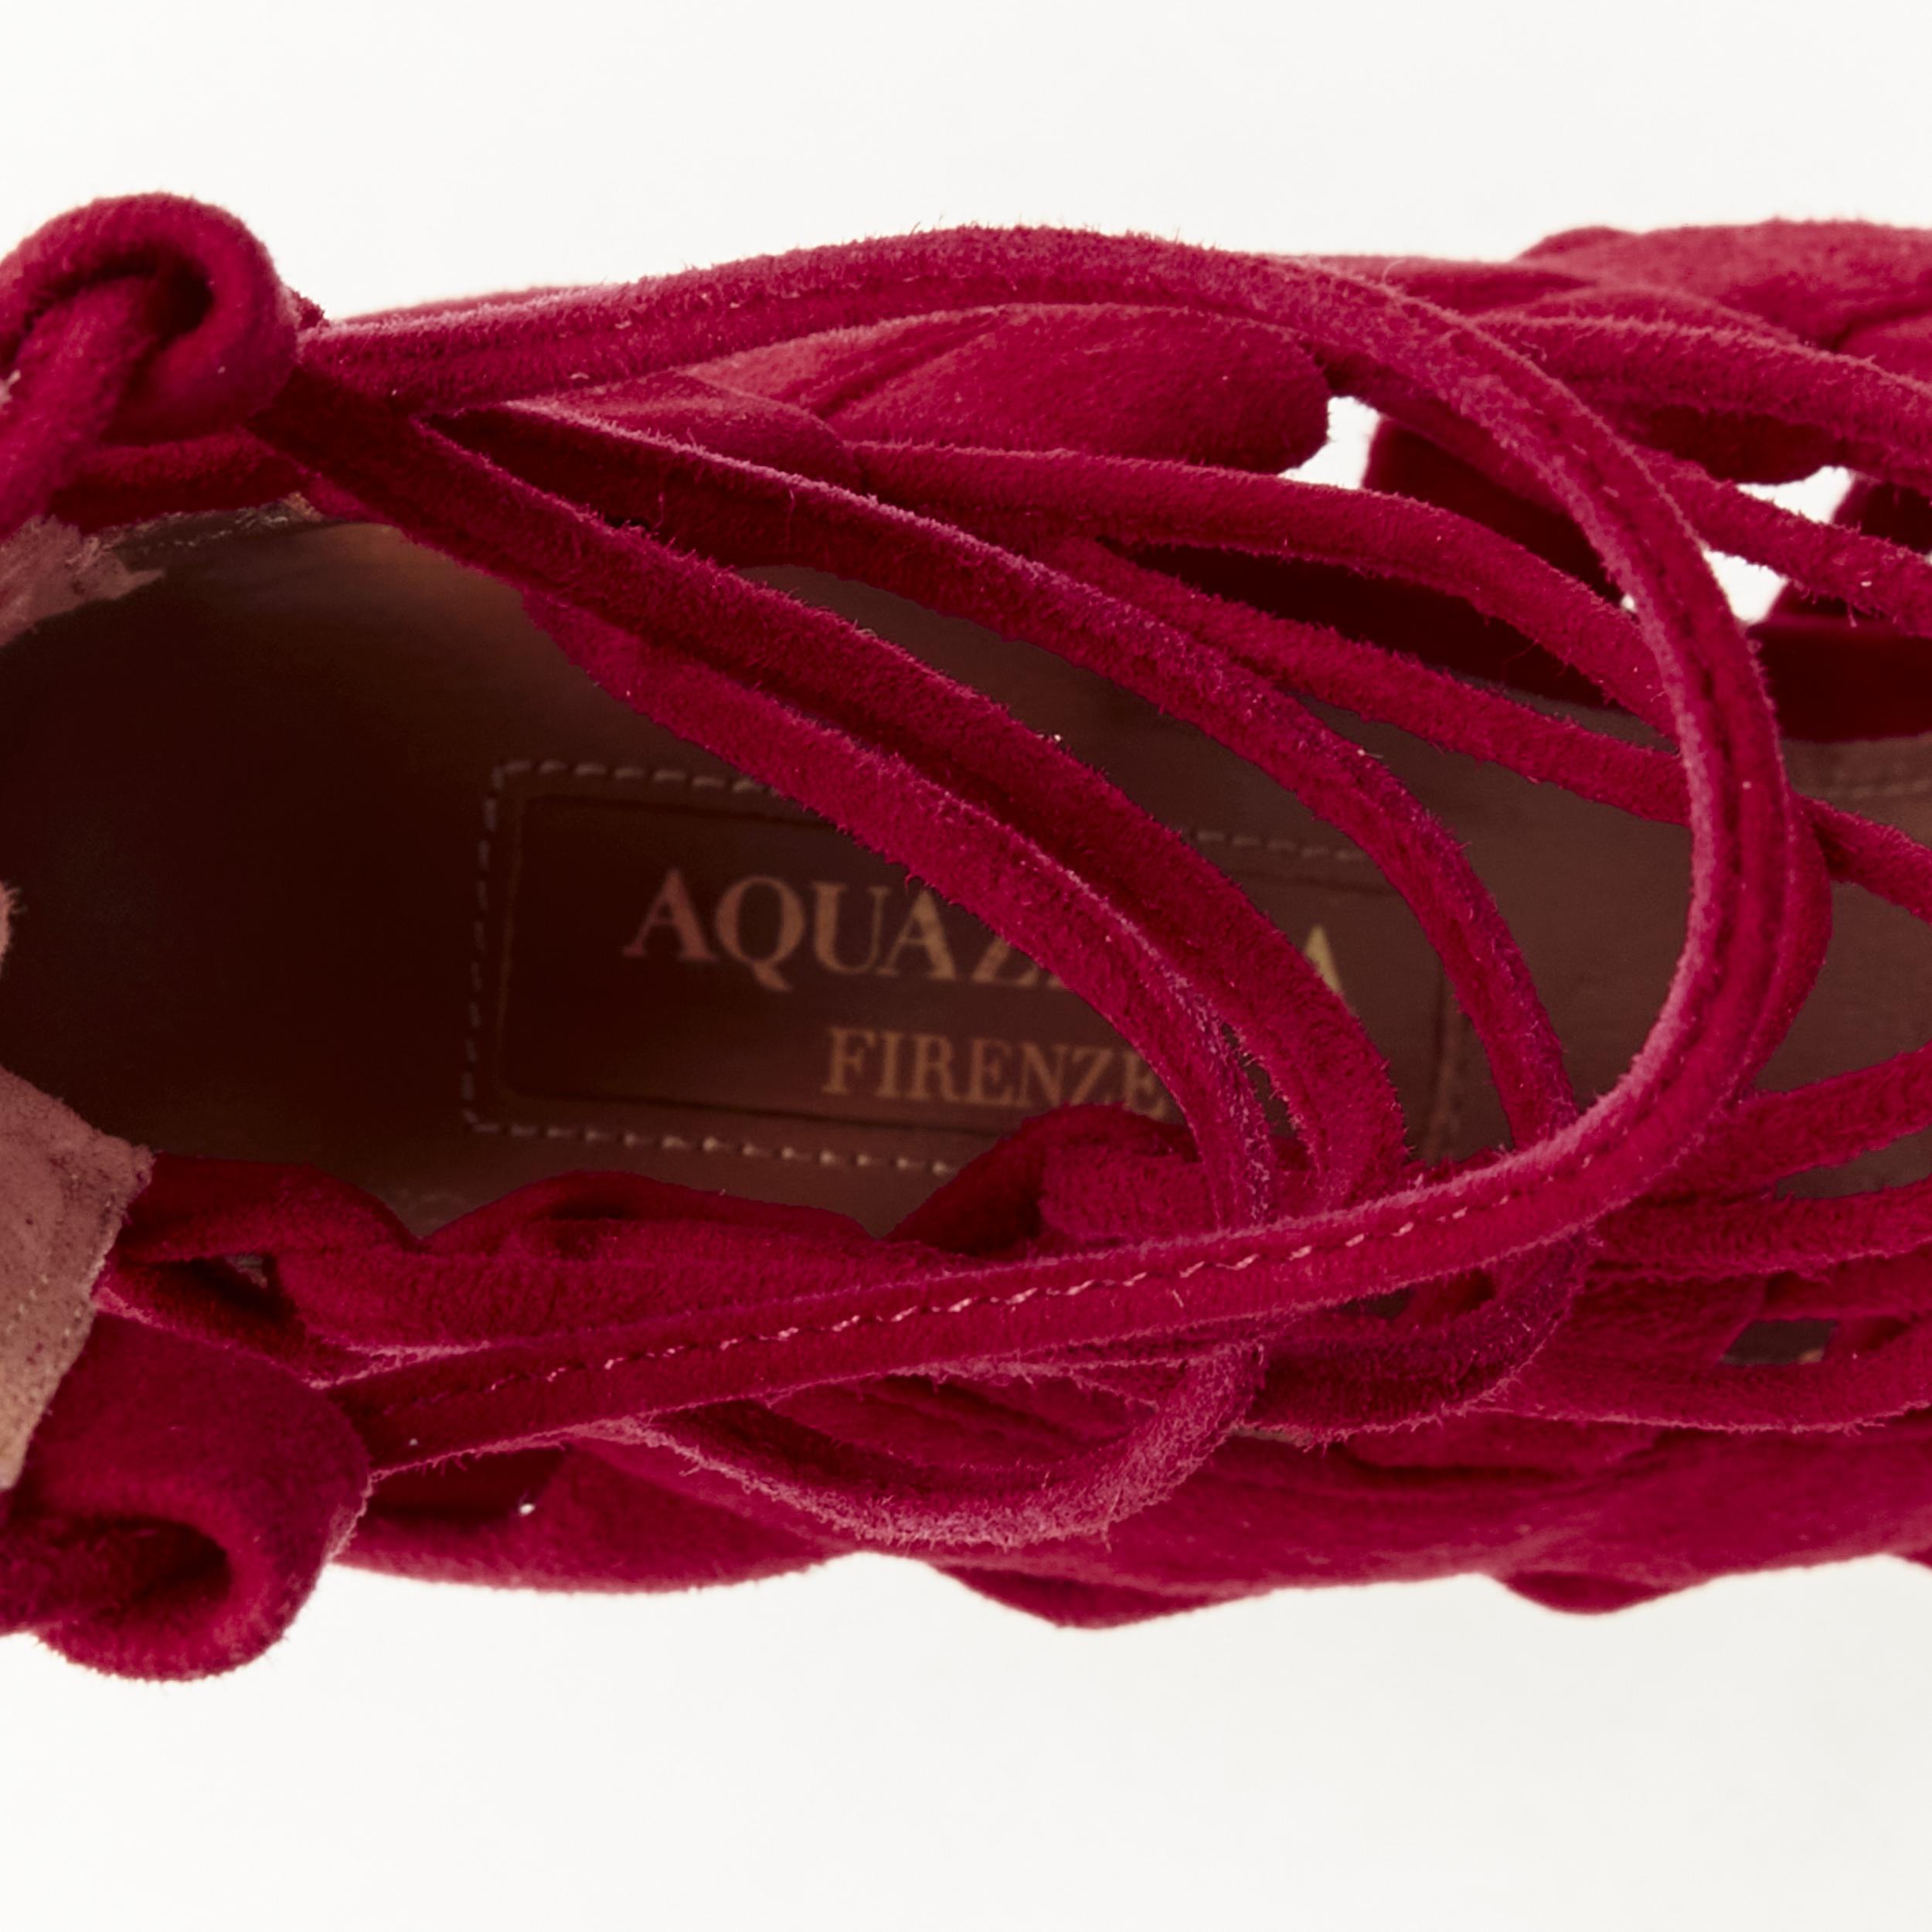 AQUAZZURA Amazon dark red suede lace up sandals high heels EU38 For Sale 1